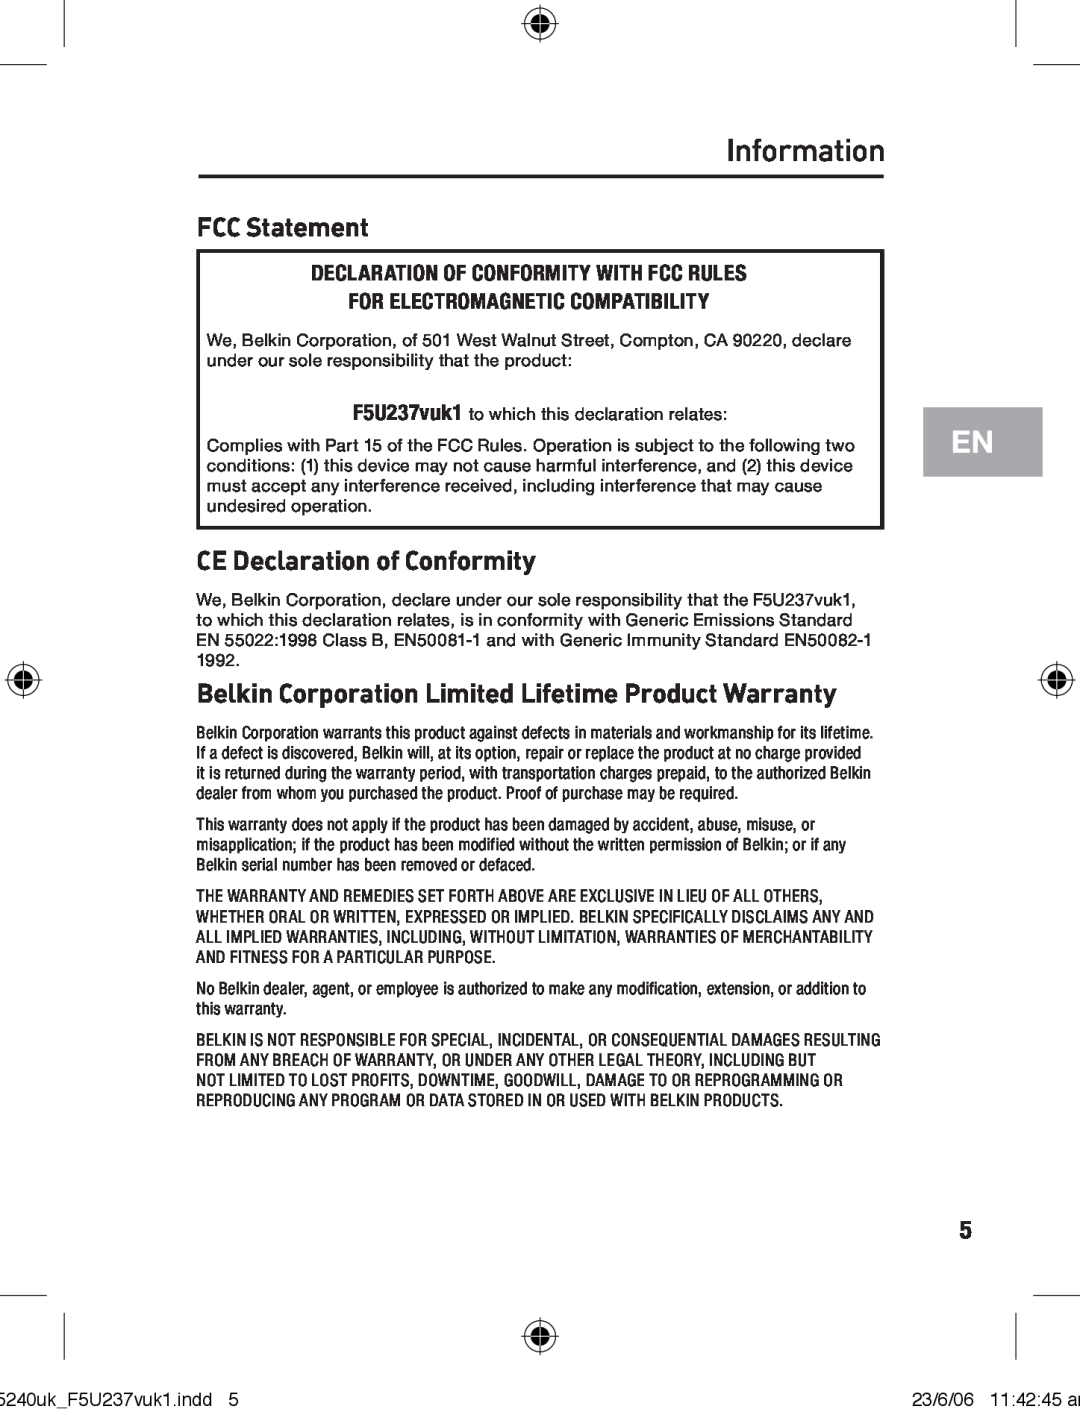 Belkin F5U237VUK1 user manual Information, FCC Statement, CE Declaration of Conformity 